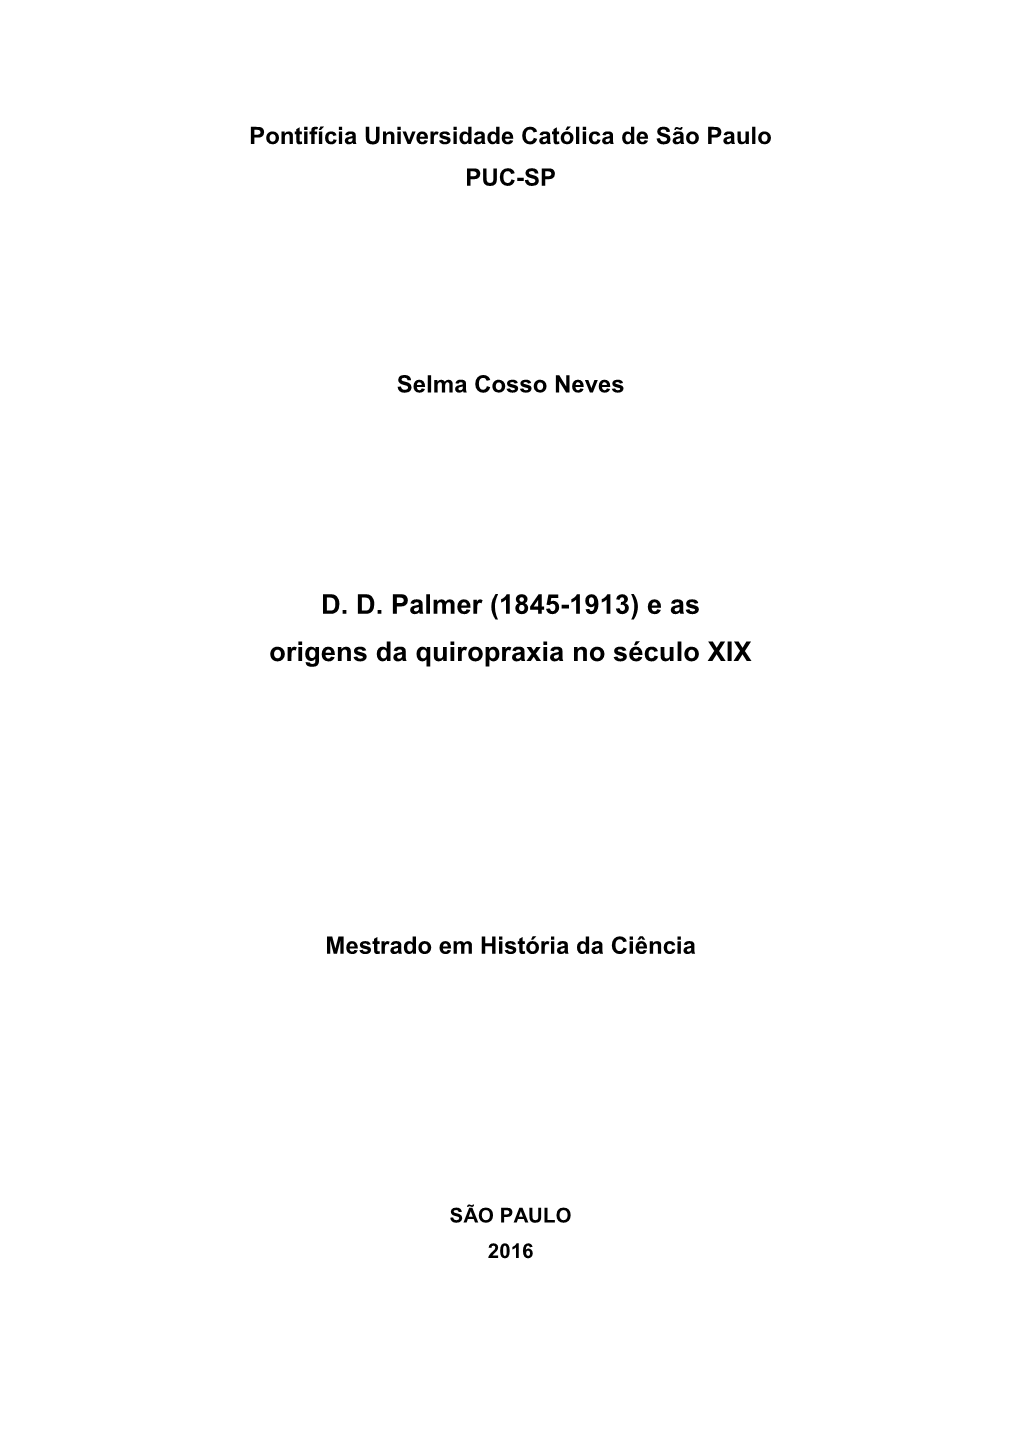 D. D. Palmer (1845-1913) E As Origens Da Quiropraxia No Século XIX